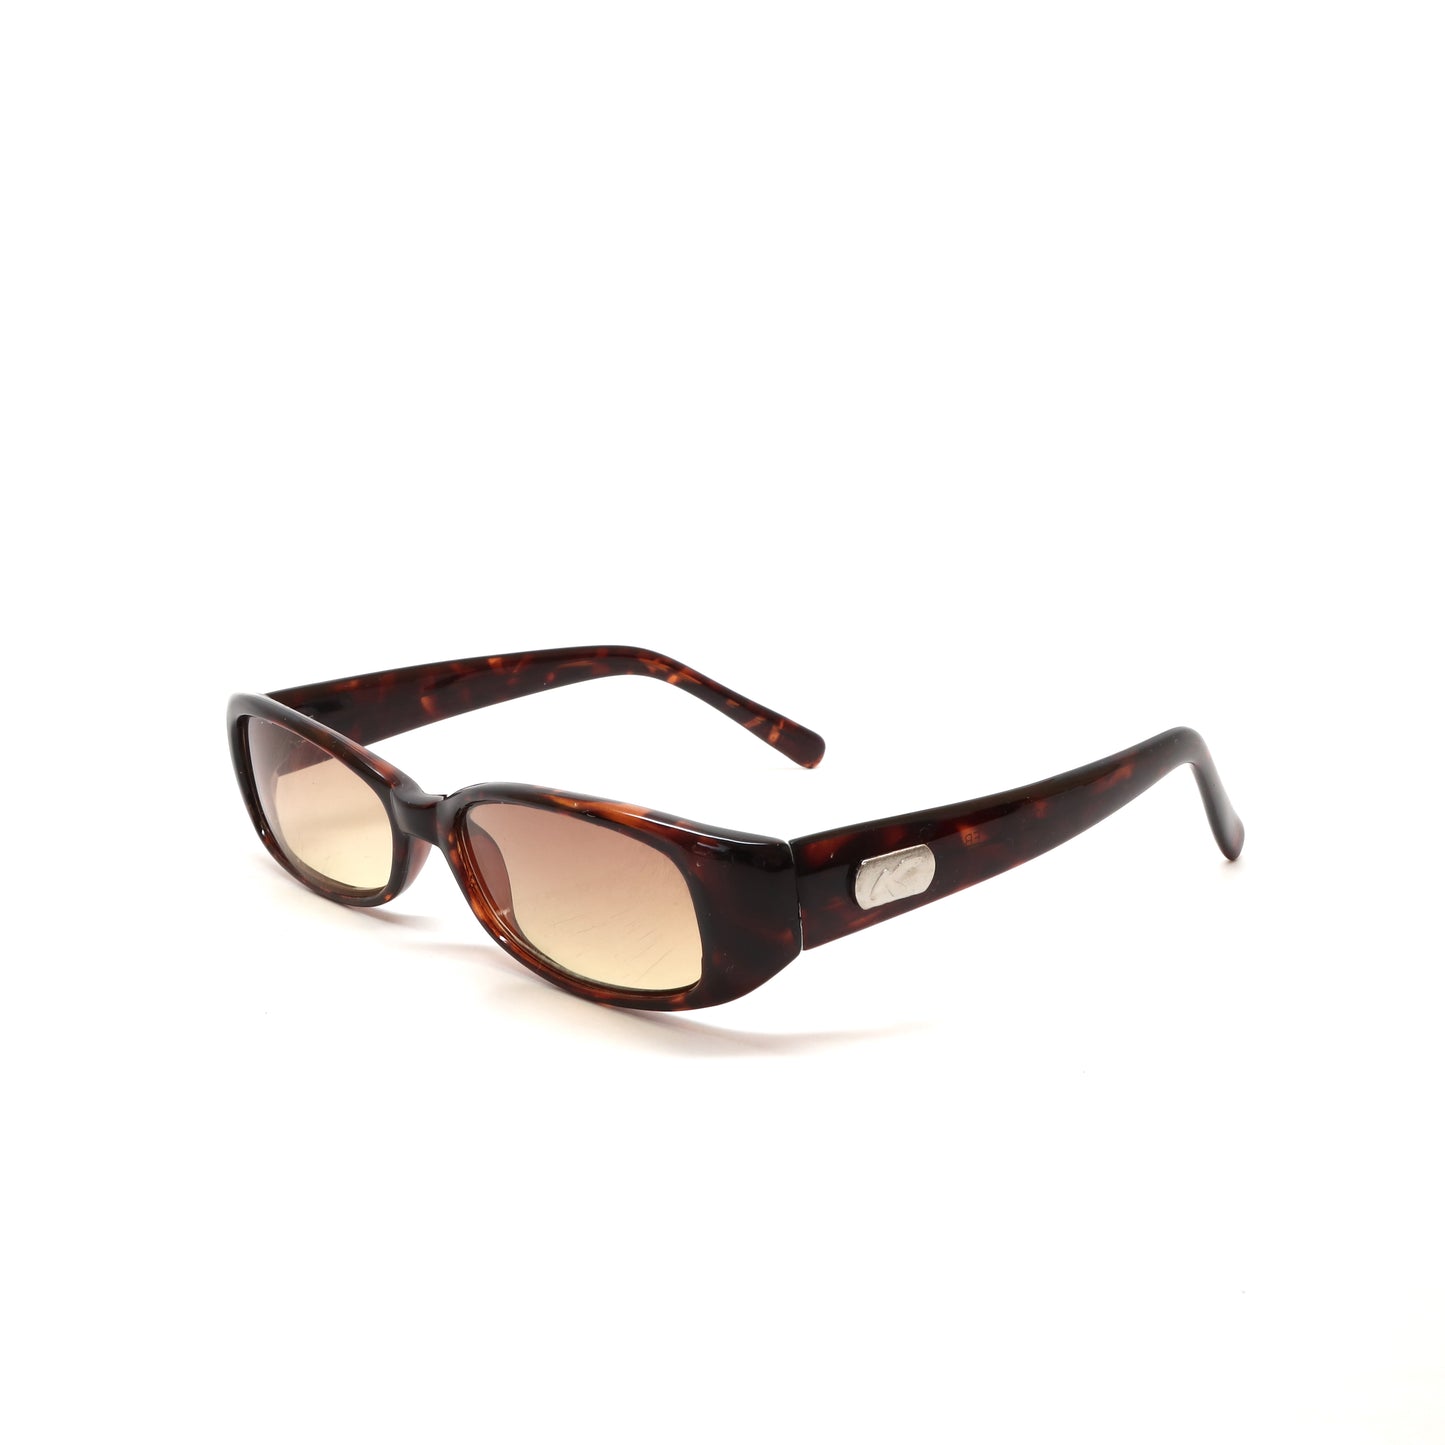 Vintage Small Size 90s Deadstock Rectangle Sunglasses - Tortoise Tan